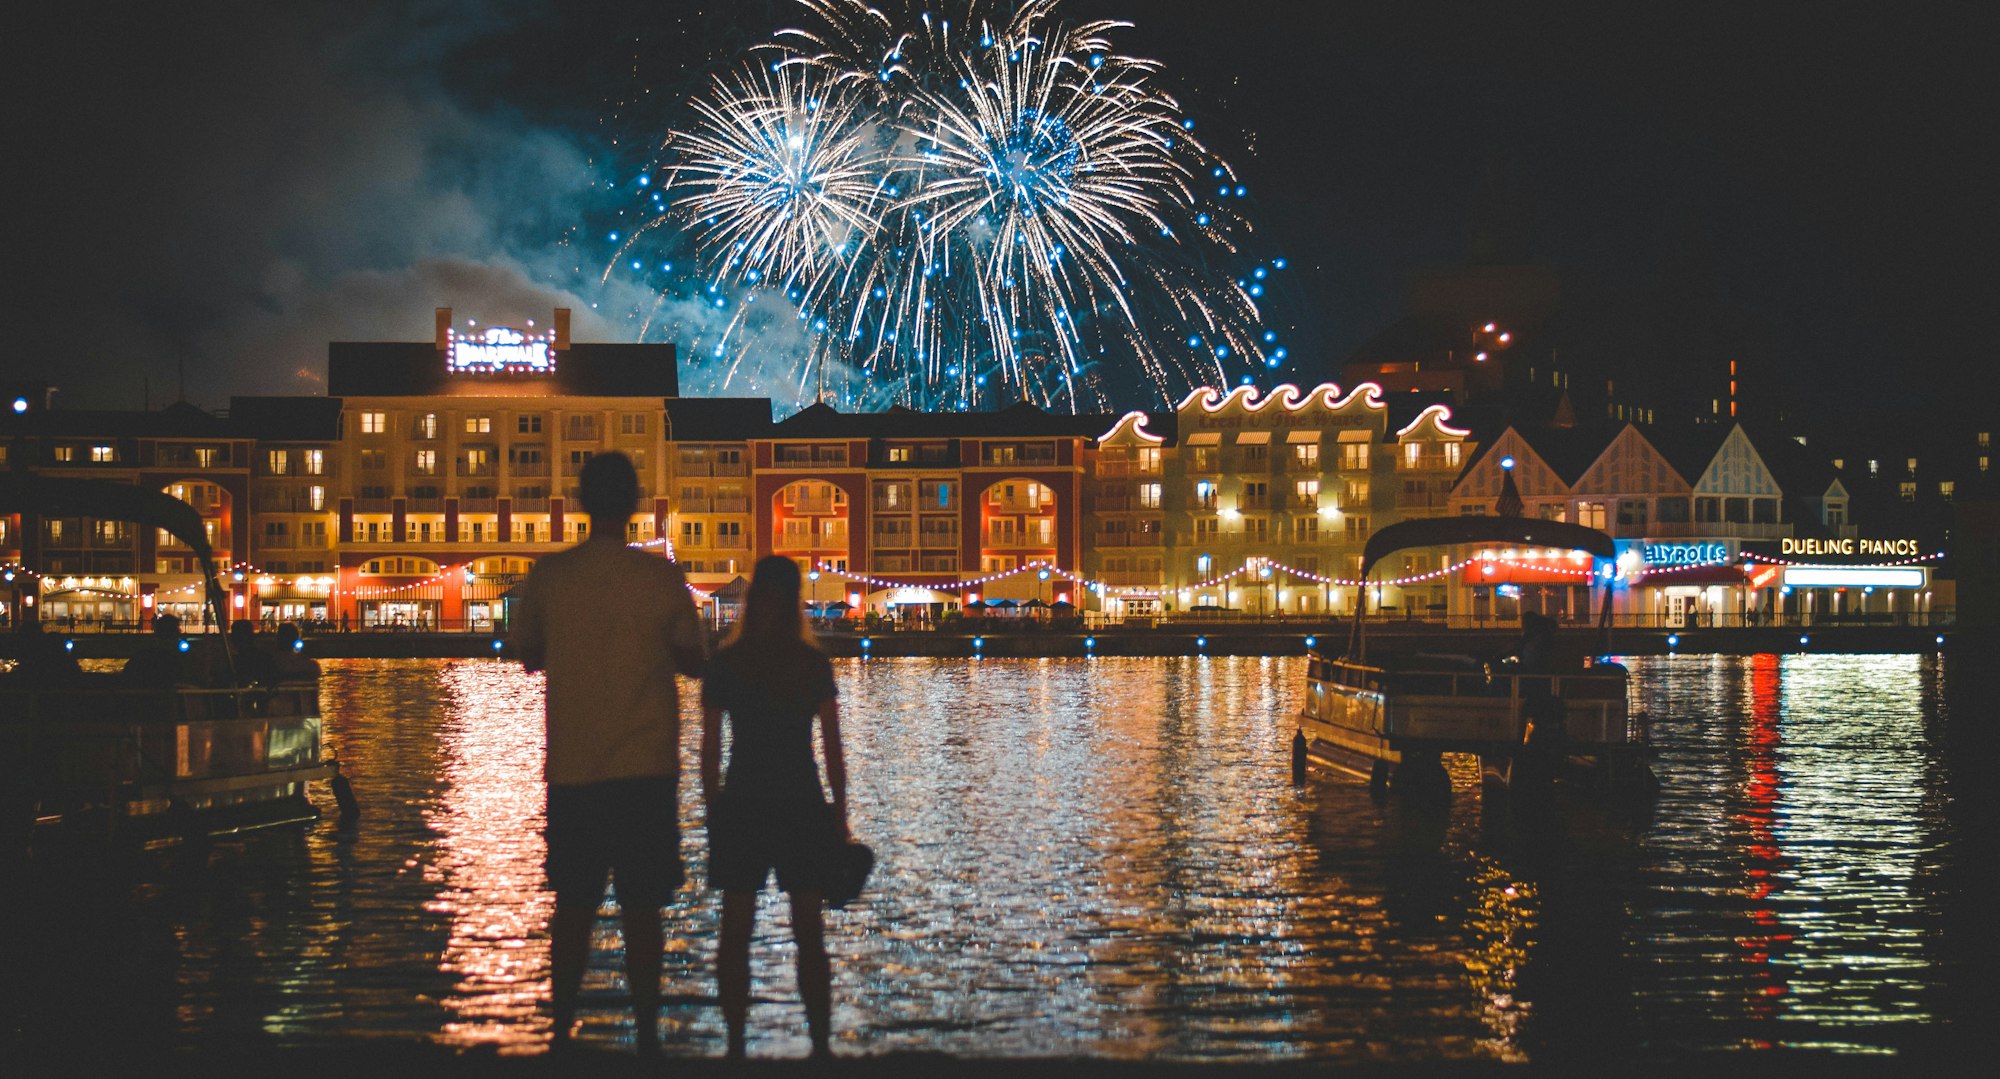 The fireworks show at Disney's Boardwalk Resort near Disney World.